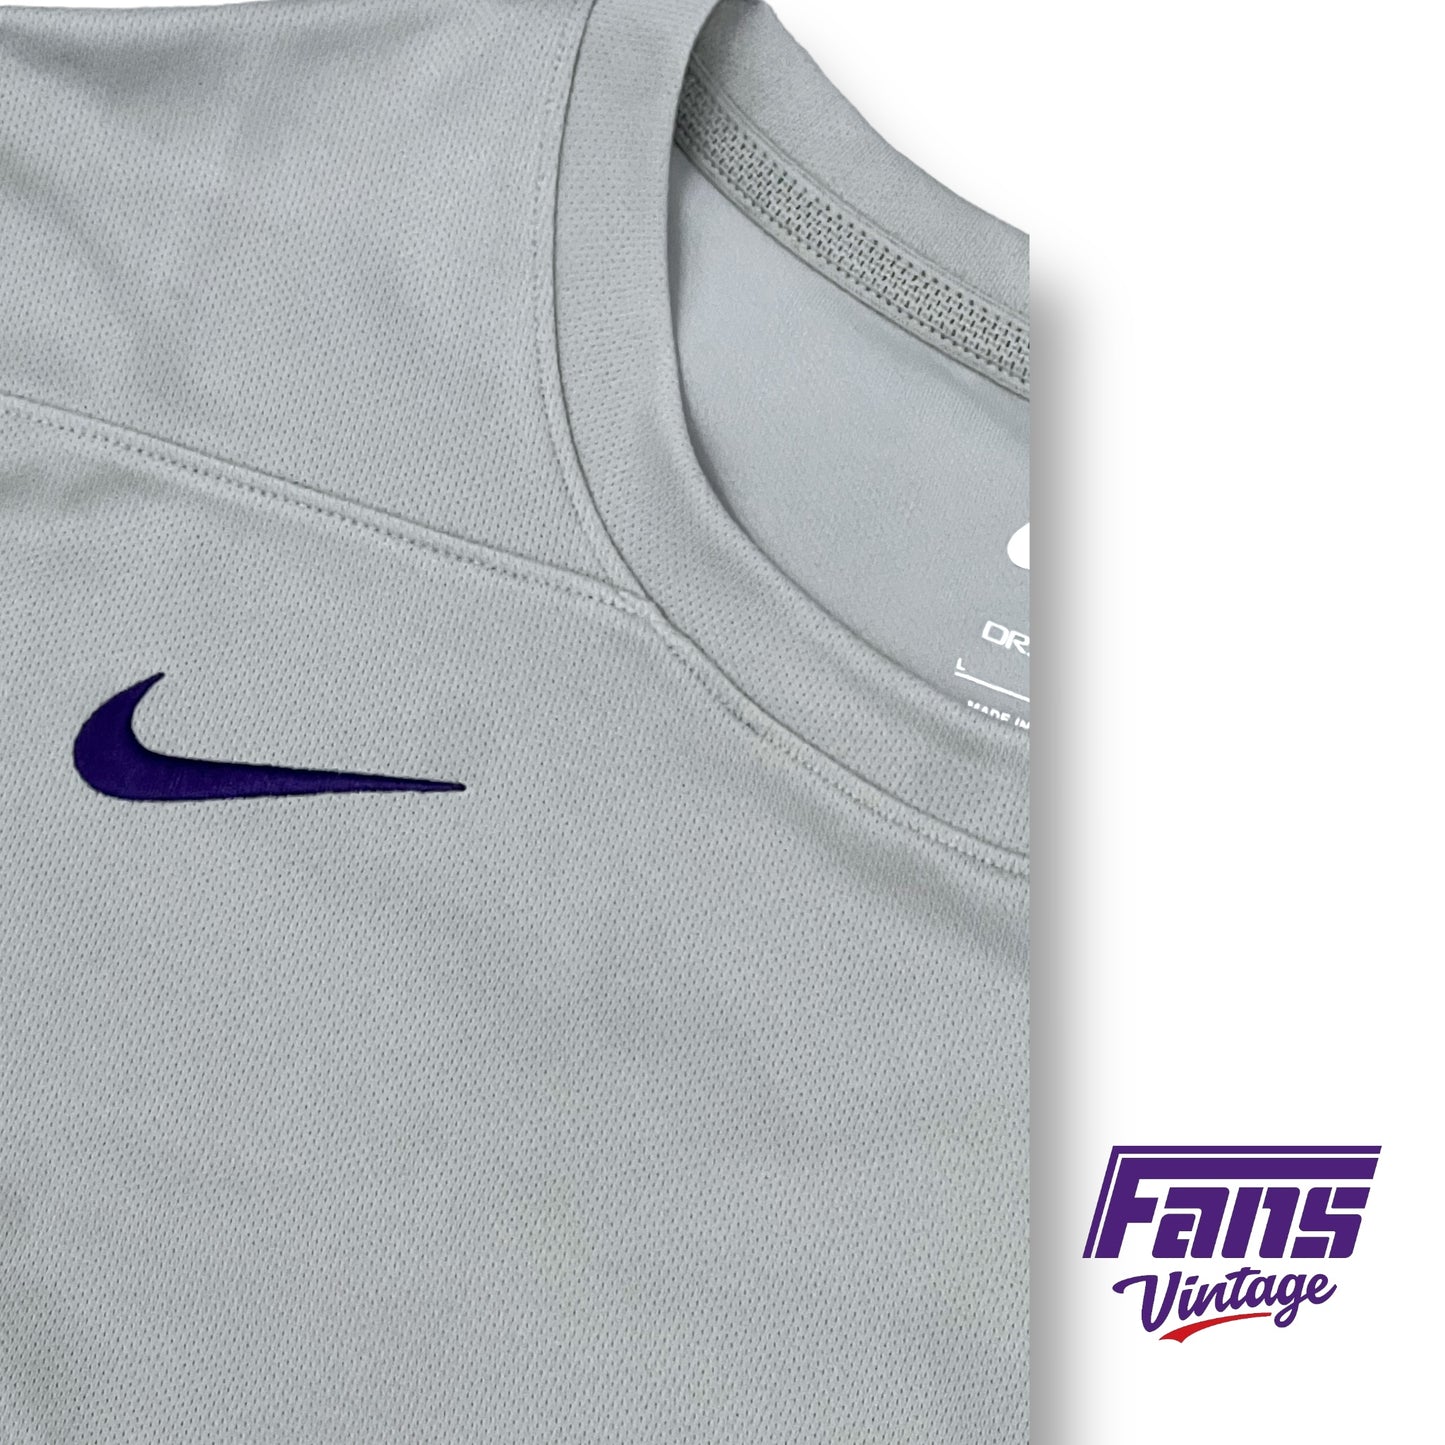 TCU Team Issue Nike Drifit Shirt - Long Sleeve with Premium Details